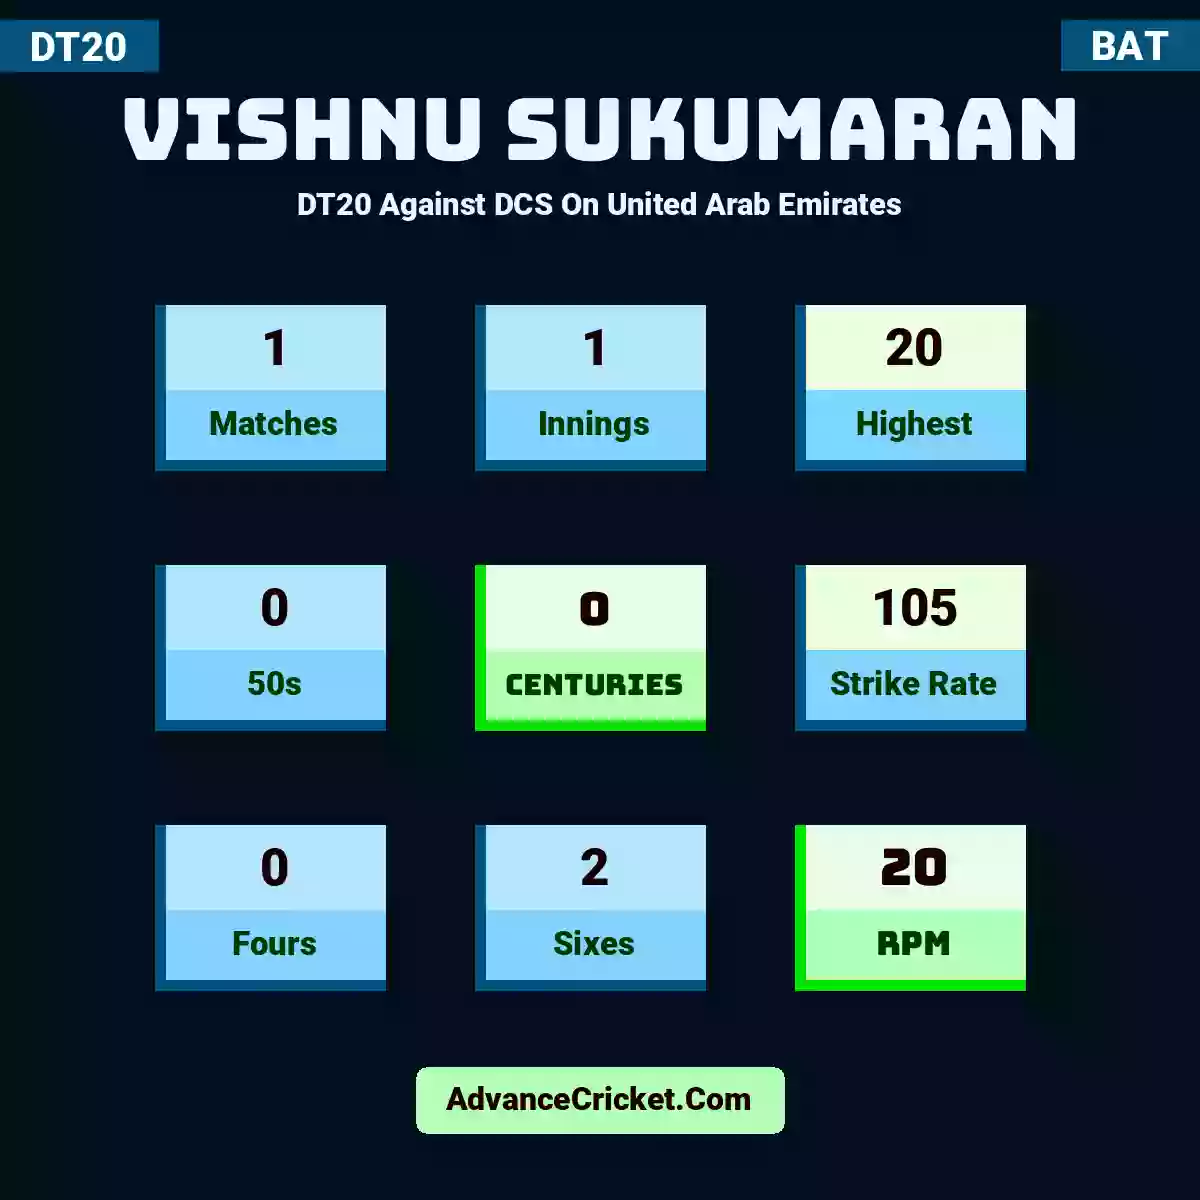 Vishnu Sukumaran DT20  Against DCS On United Arab Emirates, Vishnu Sukumaran played 1 matches, scored 20 runs as highest, 0 half-centuries, and 0 centuries, with a strike rate of 105. V.Sukumaran hit 0 fours and 2 sixes, with an RPM of 20.